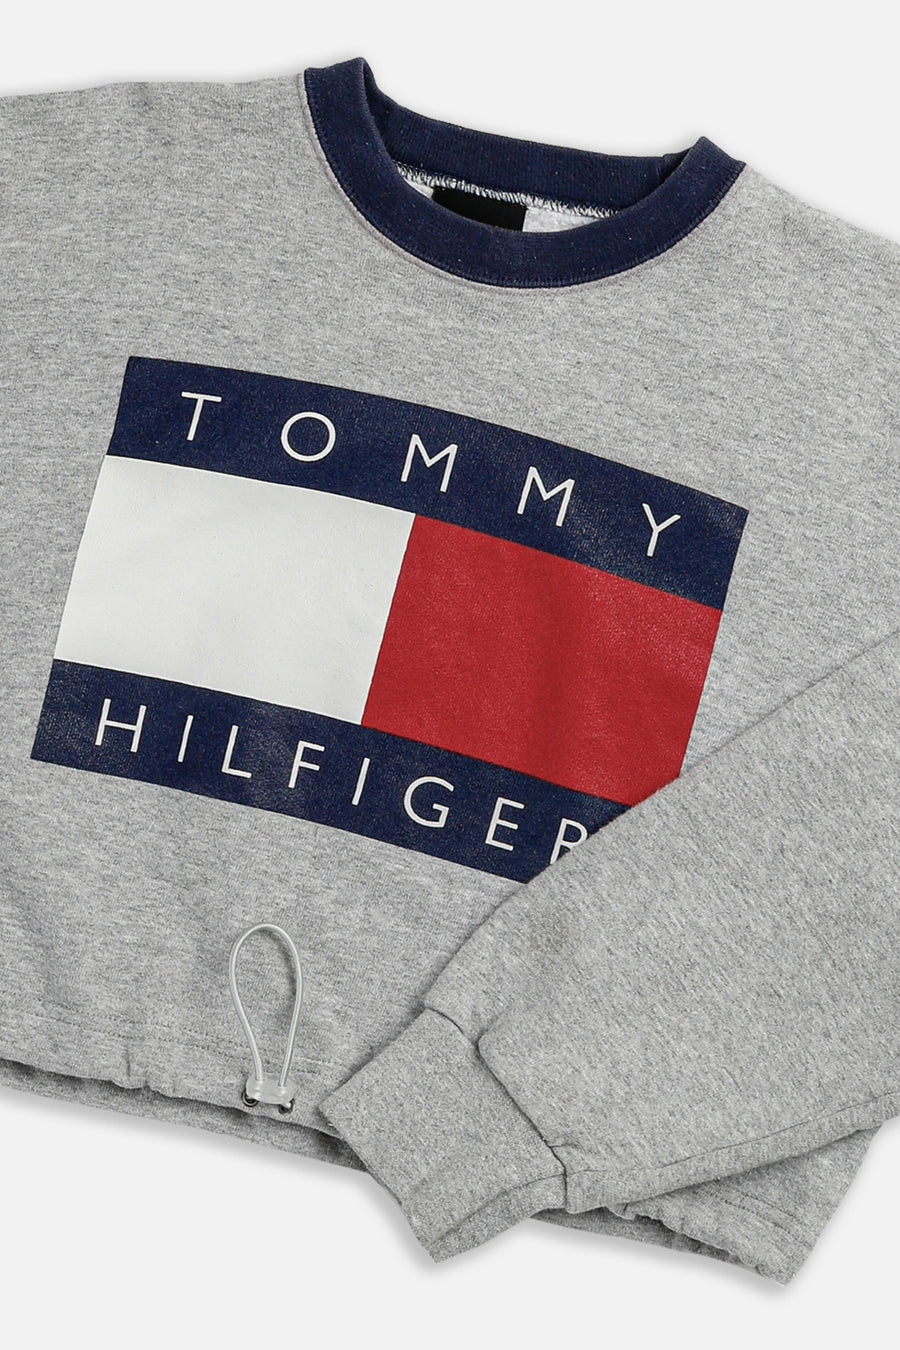 Rework Tommy Cinched Crop Sweatshirt - L